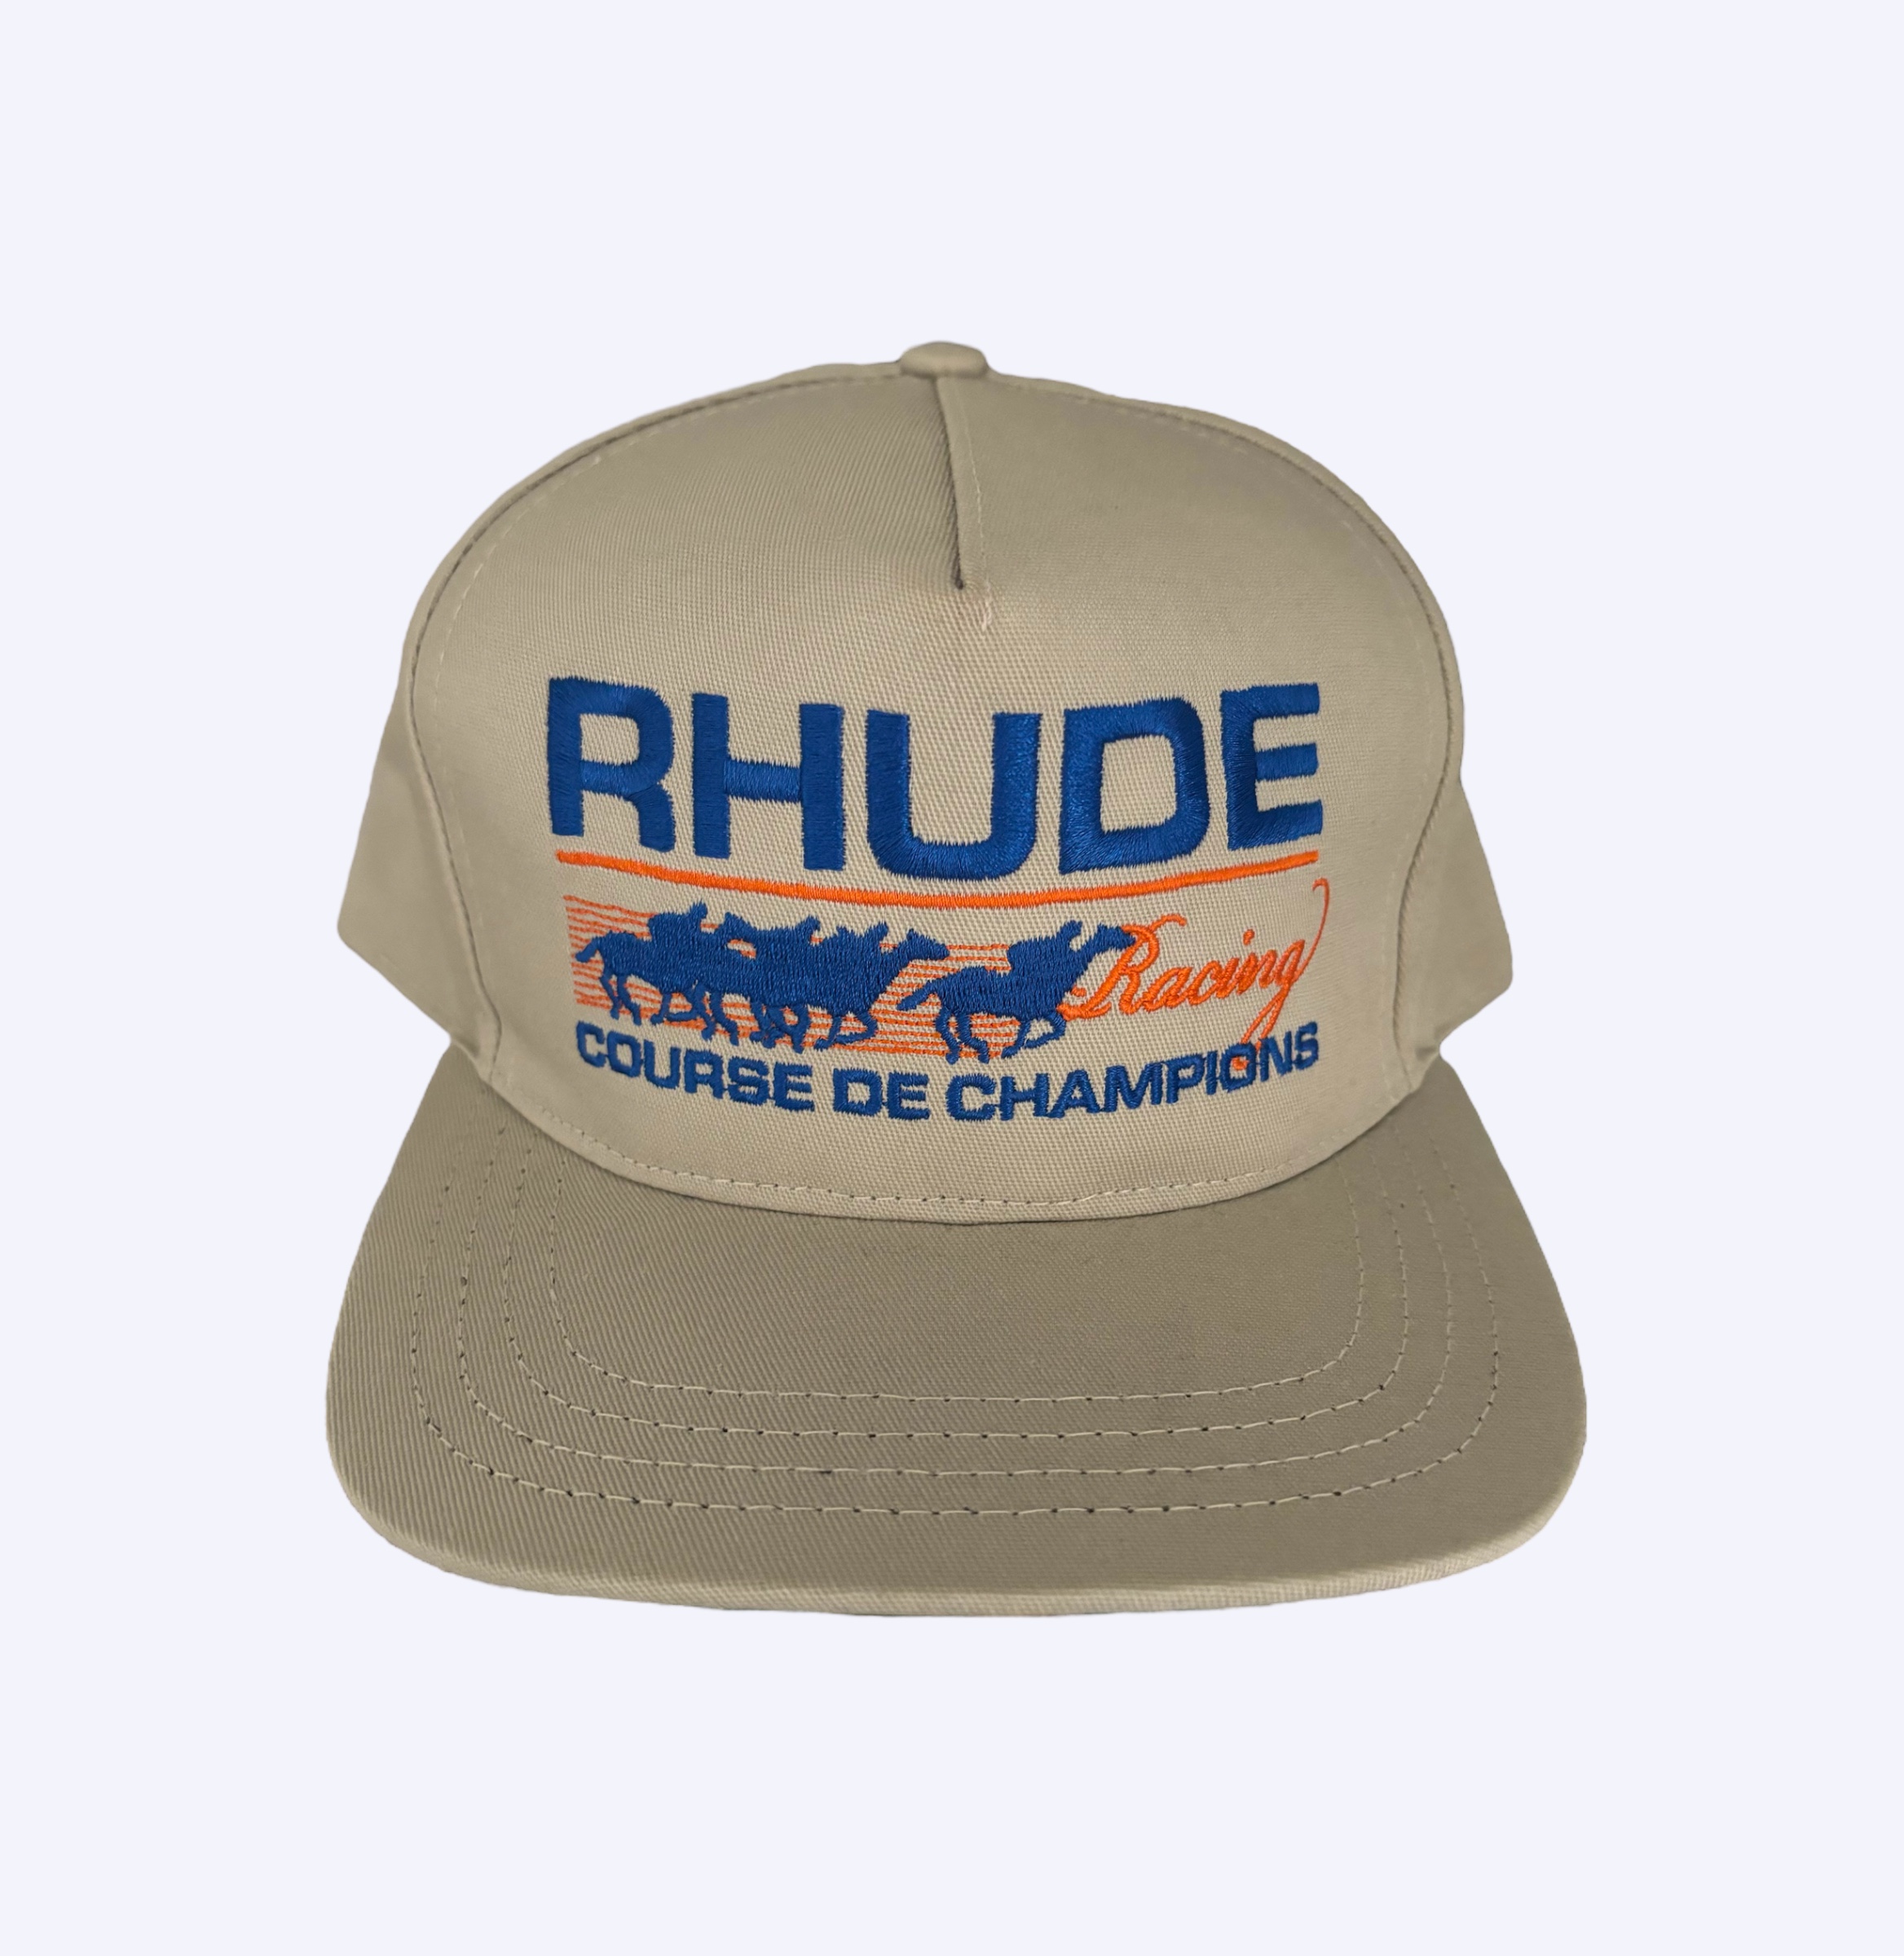 Rhude Horse Racing Course De Champion Snapback